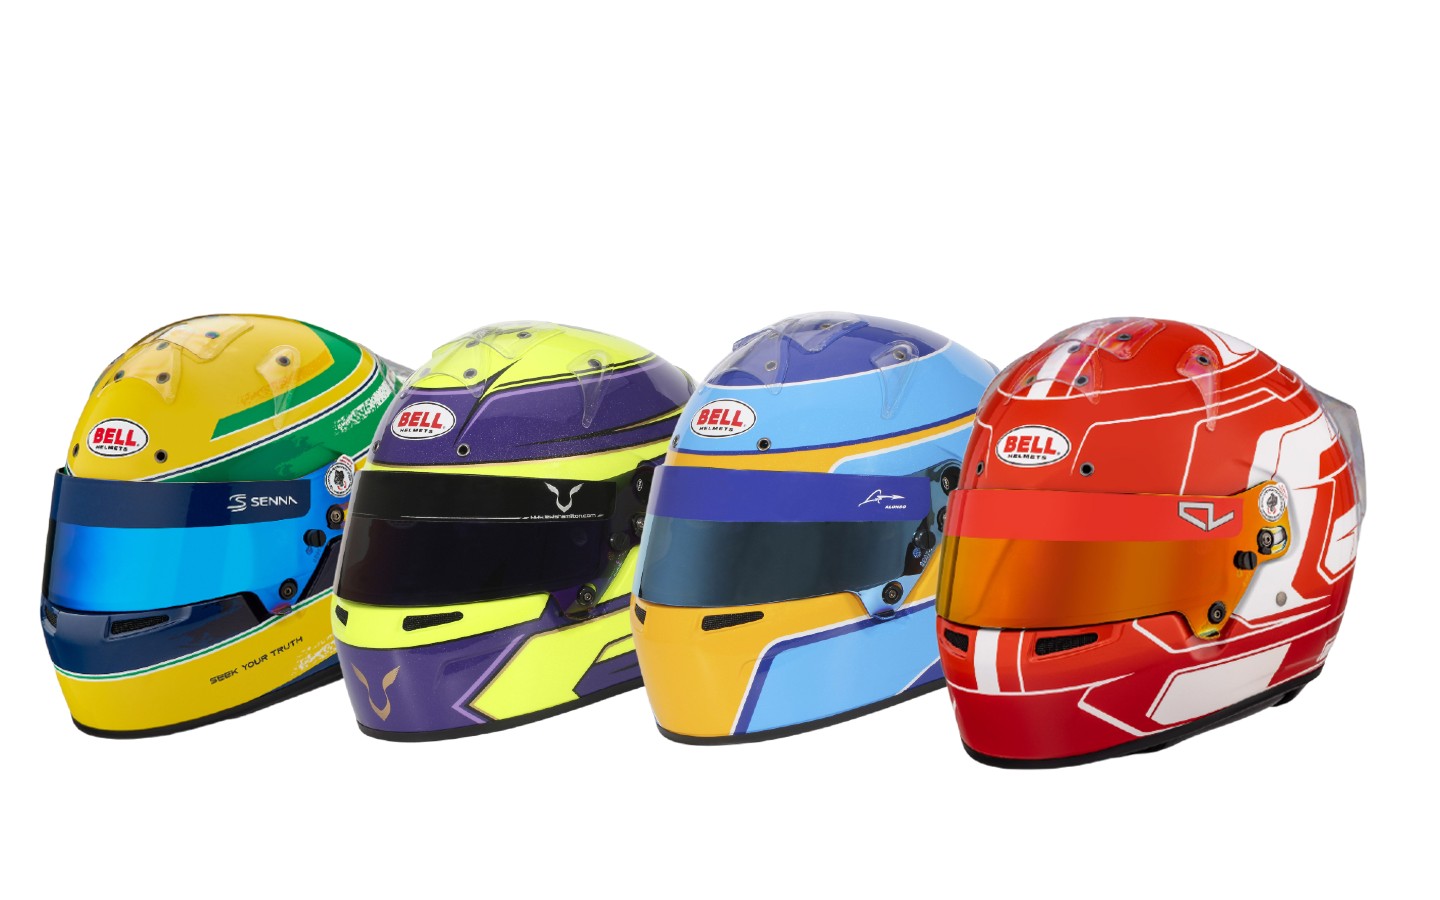 Bell KC7-CMR Series Helmetes F1 Editions - Ayrton Senna, Charles Leclerc, Lewis Hamilton, Fernando Alonso - Fast Racer